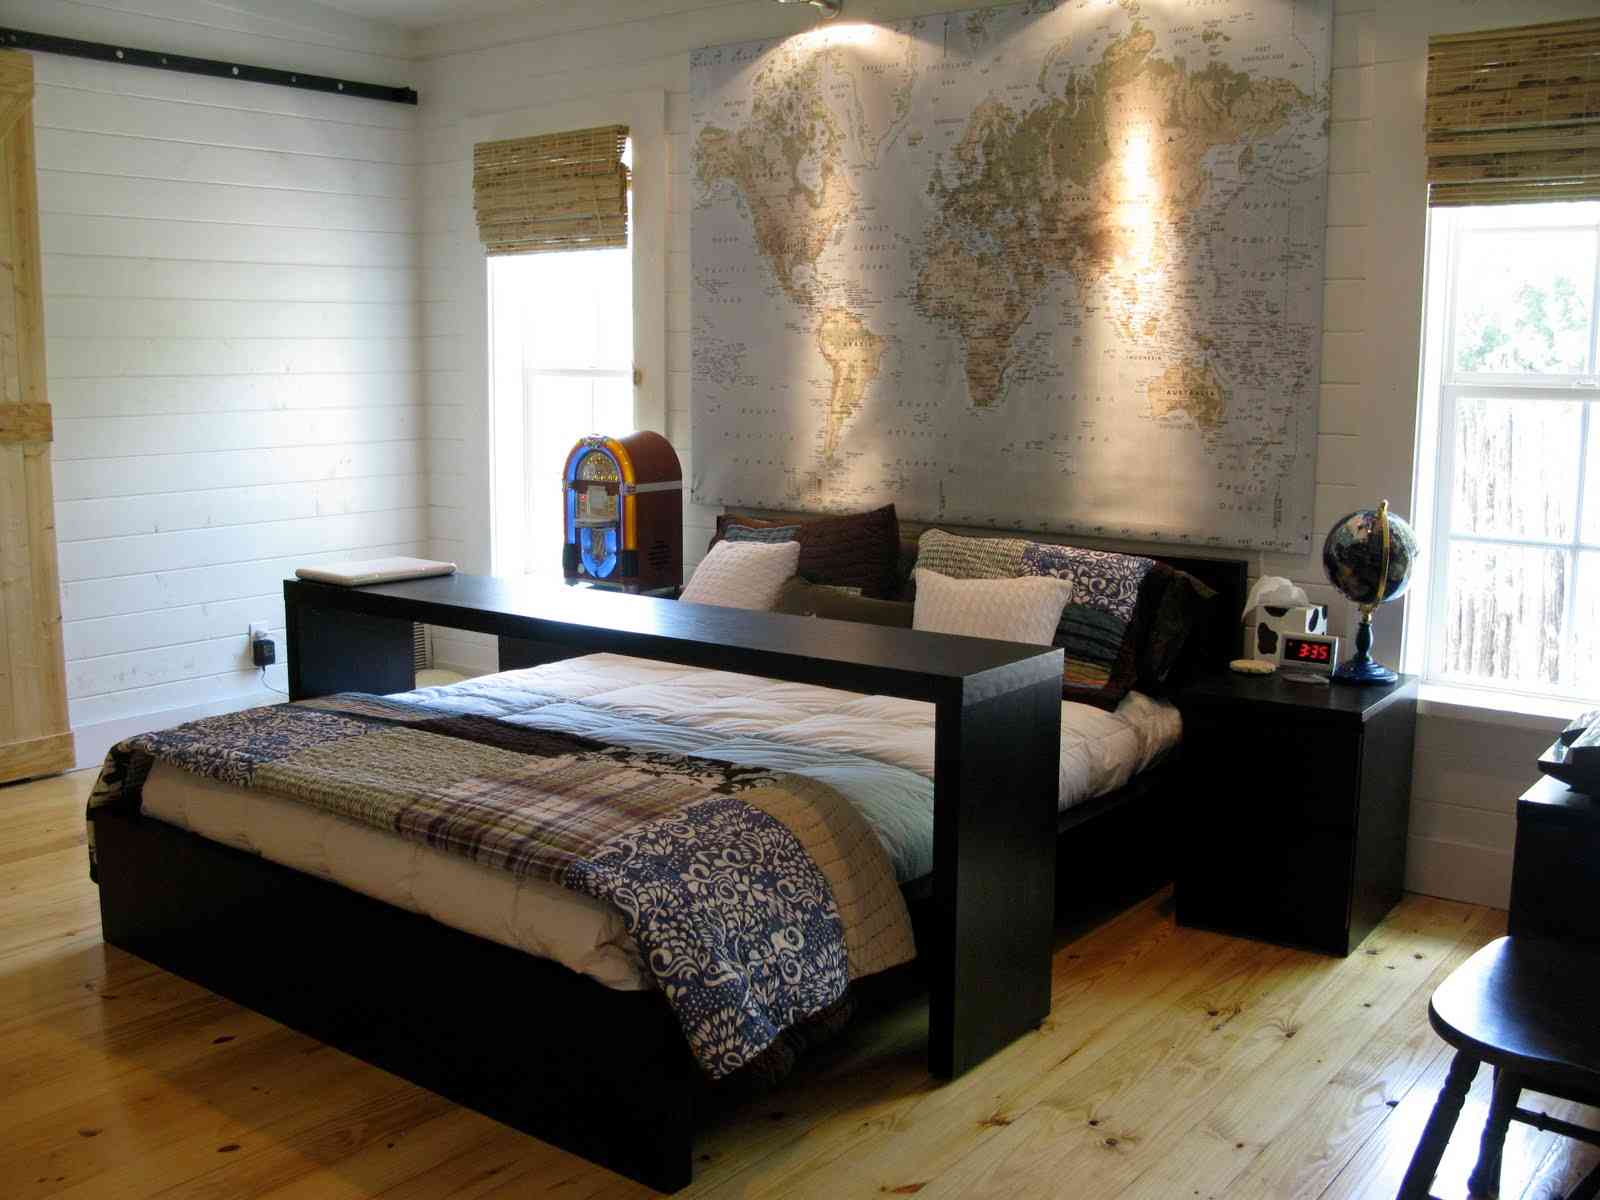 Bedroom Furniture From IKEA New Bedroom Room Design Ideas